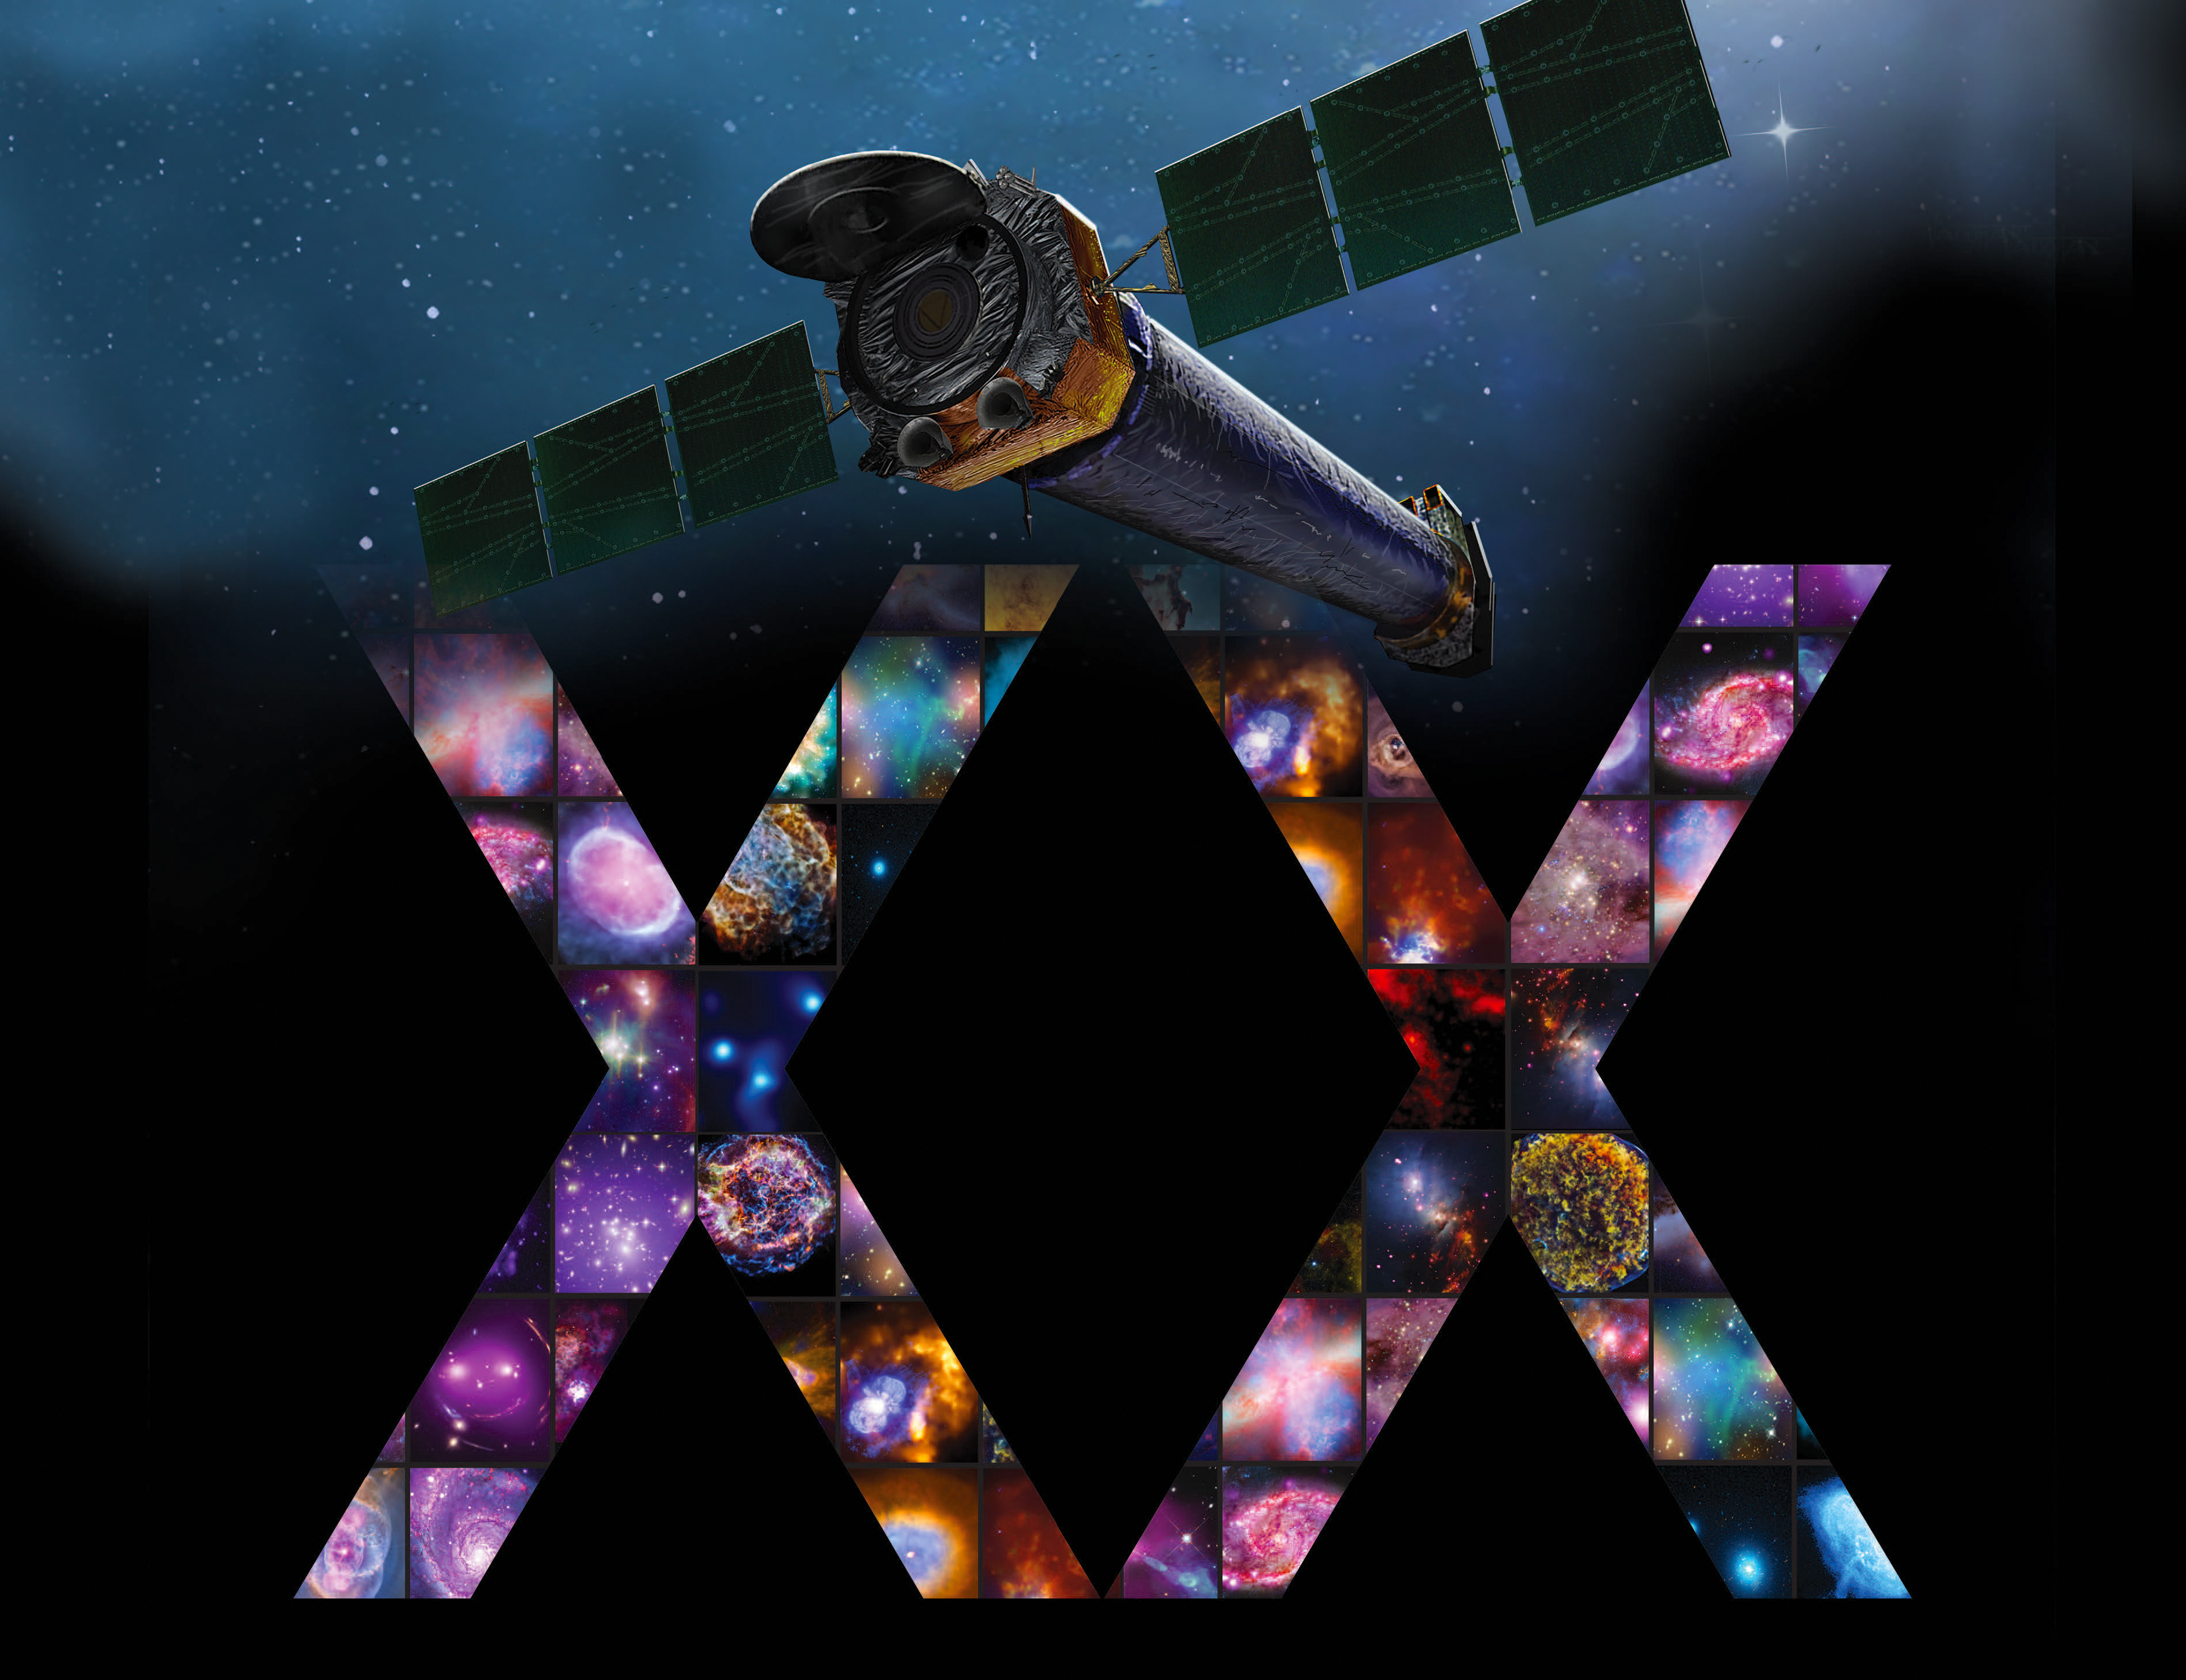 Chandra X-ray Observatory 20th